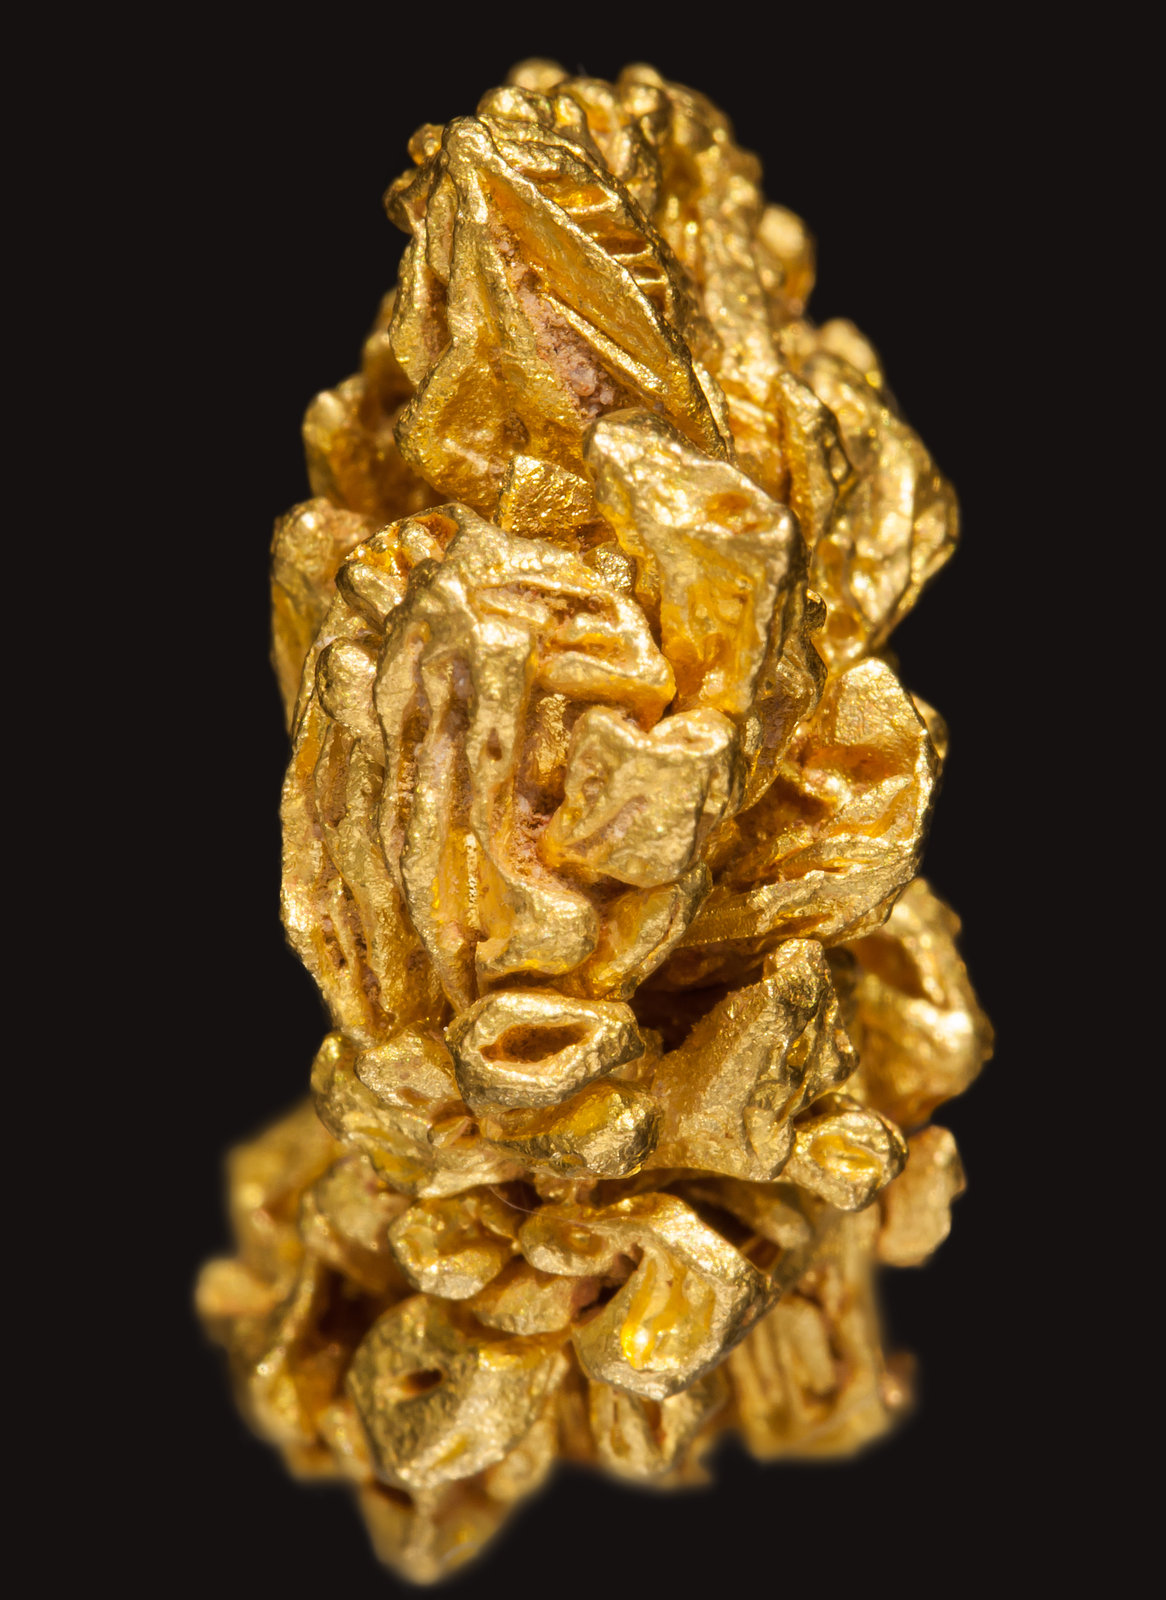 specimens/s_imagesAE5/Gold-EE97AE5s.jpg